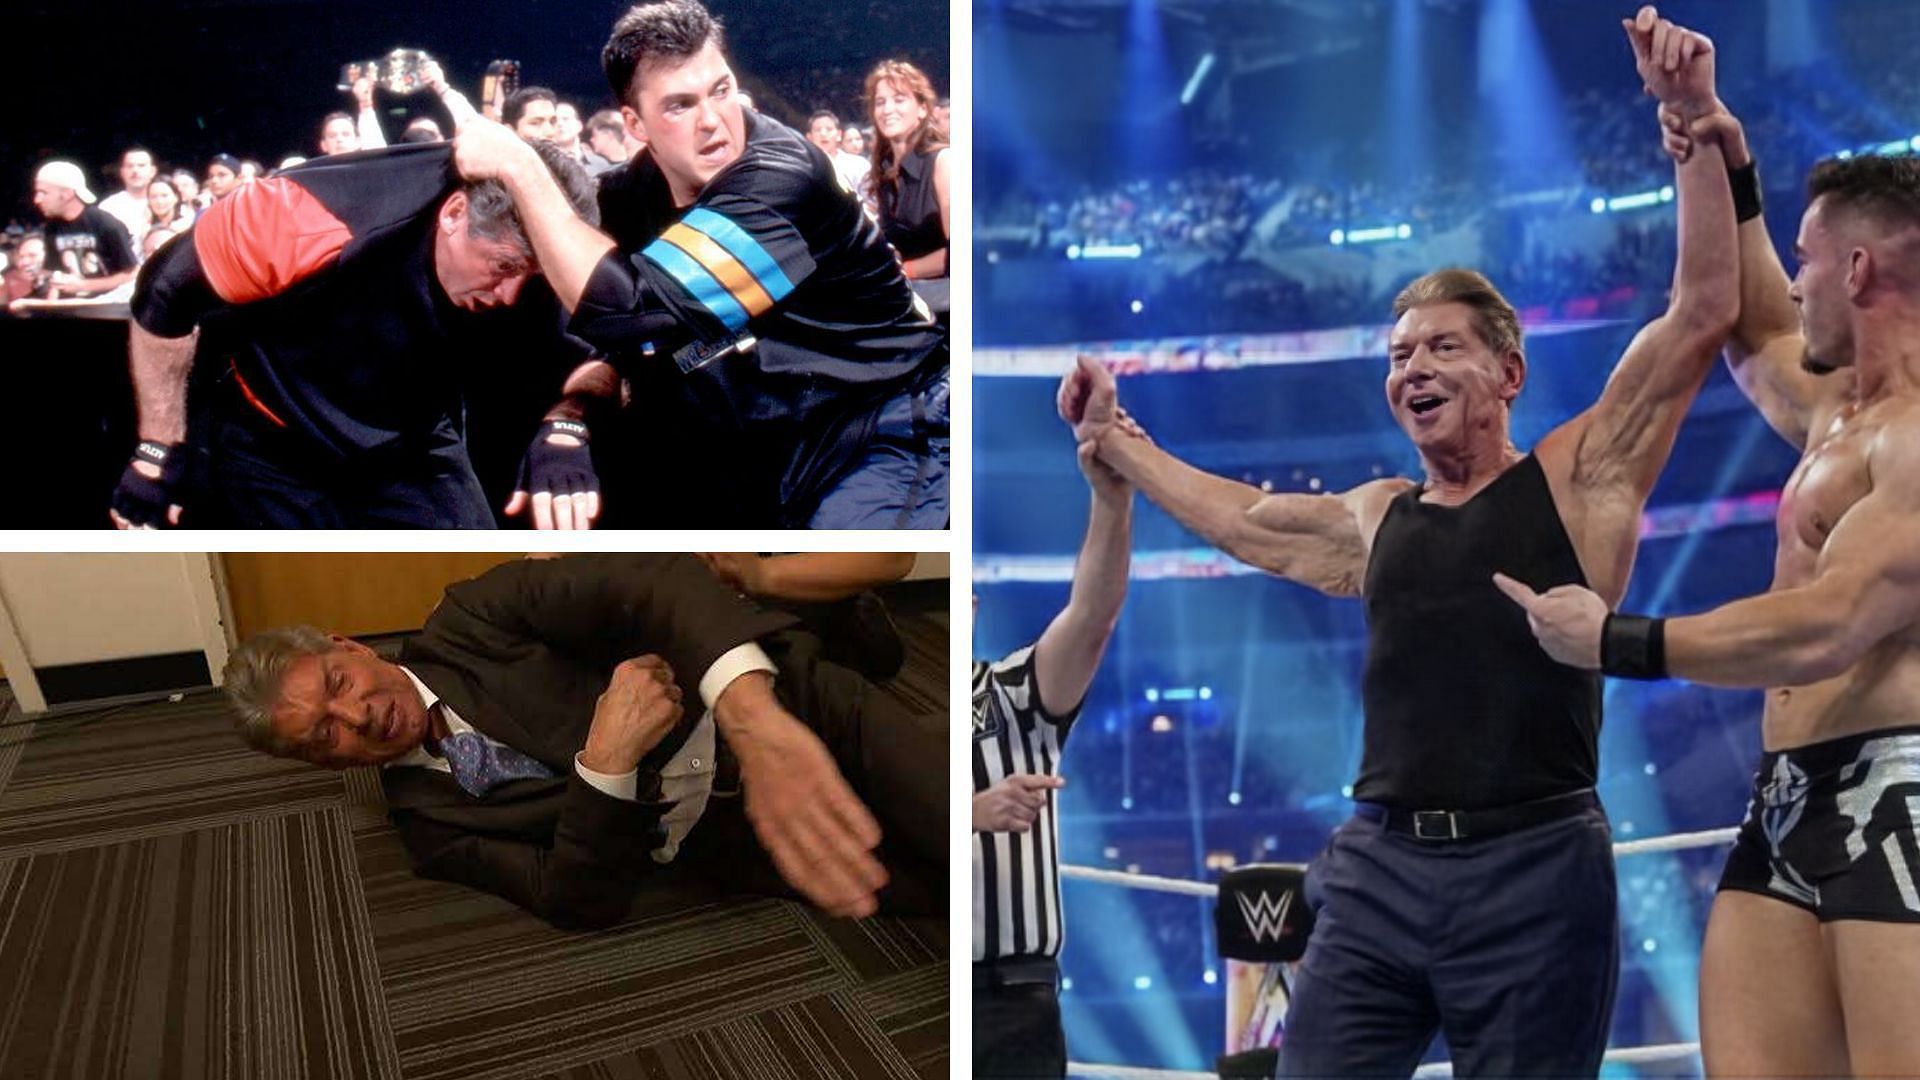 Vince McMahon recently underwent spine surgery